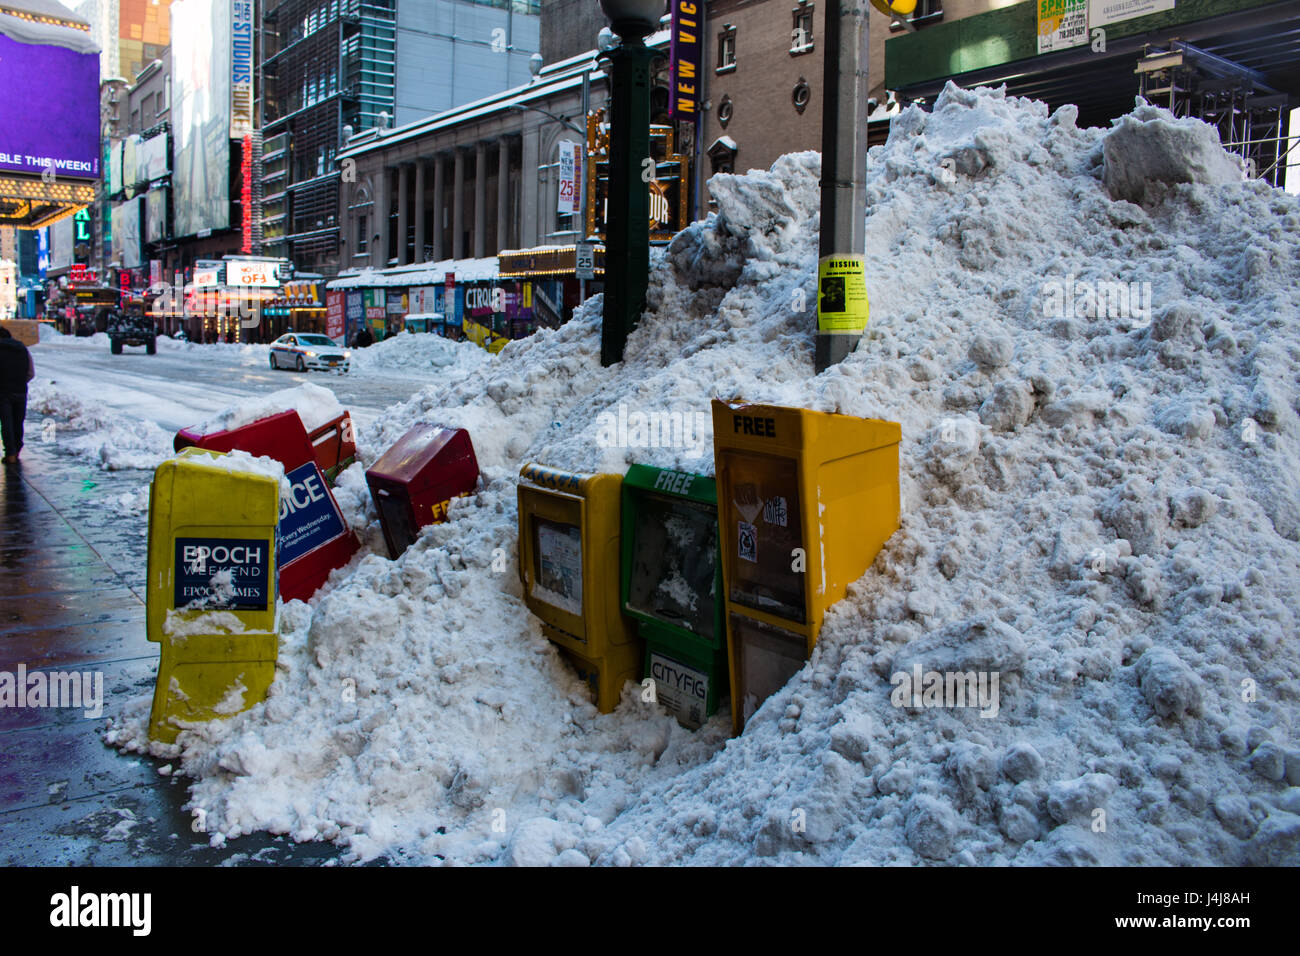 Snow build up on the new york street Stock Photo